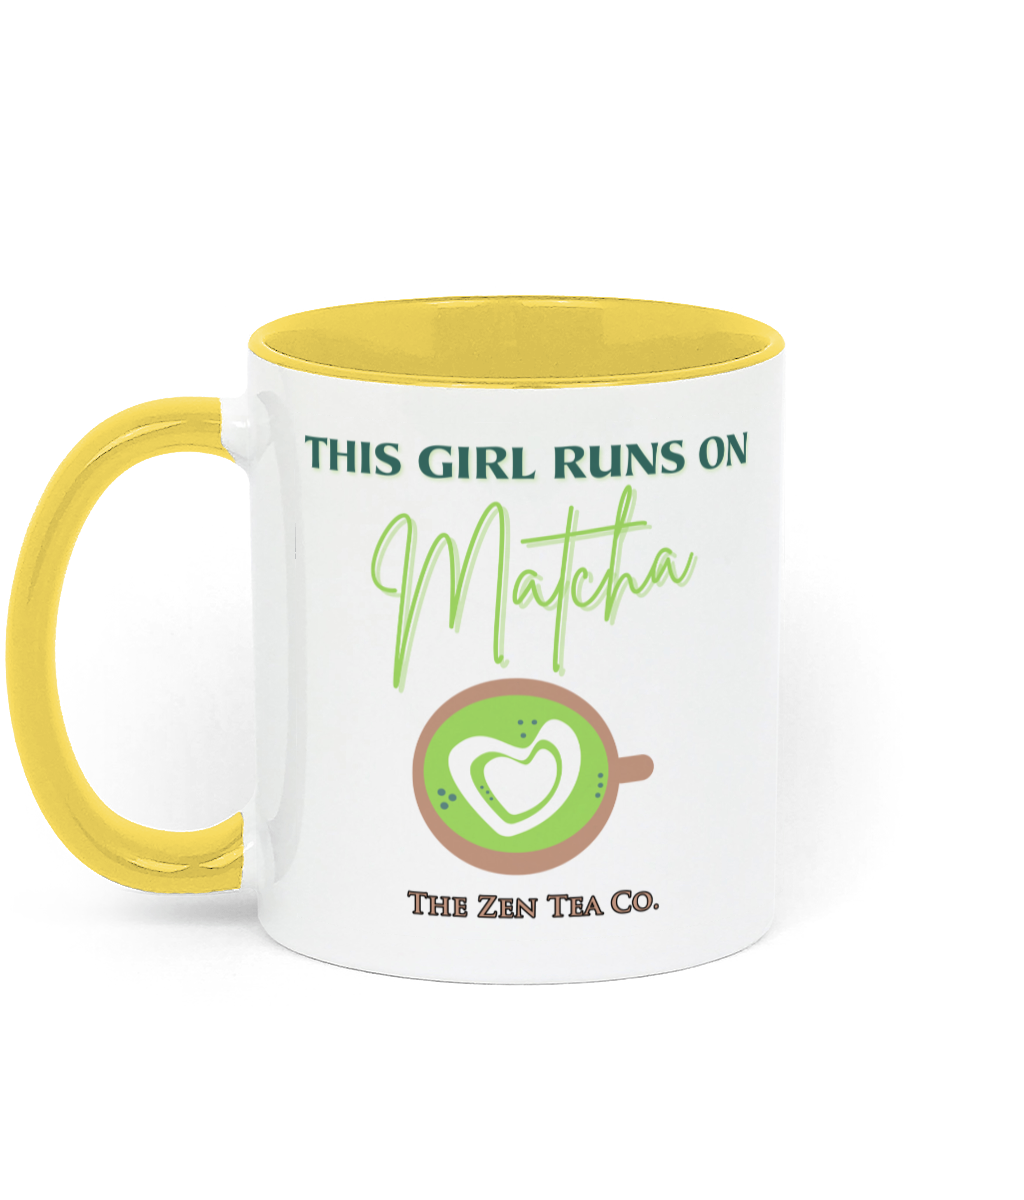 Two Toned Ceramic Mug for Matcha Green Tea lovers - This Girl Runs On Matcha